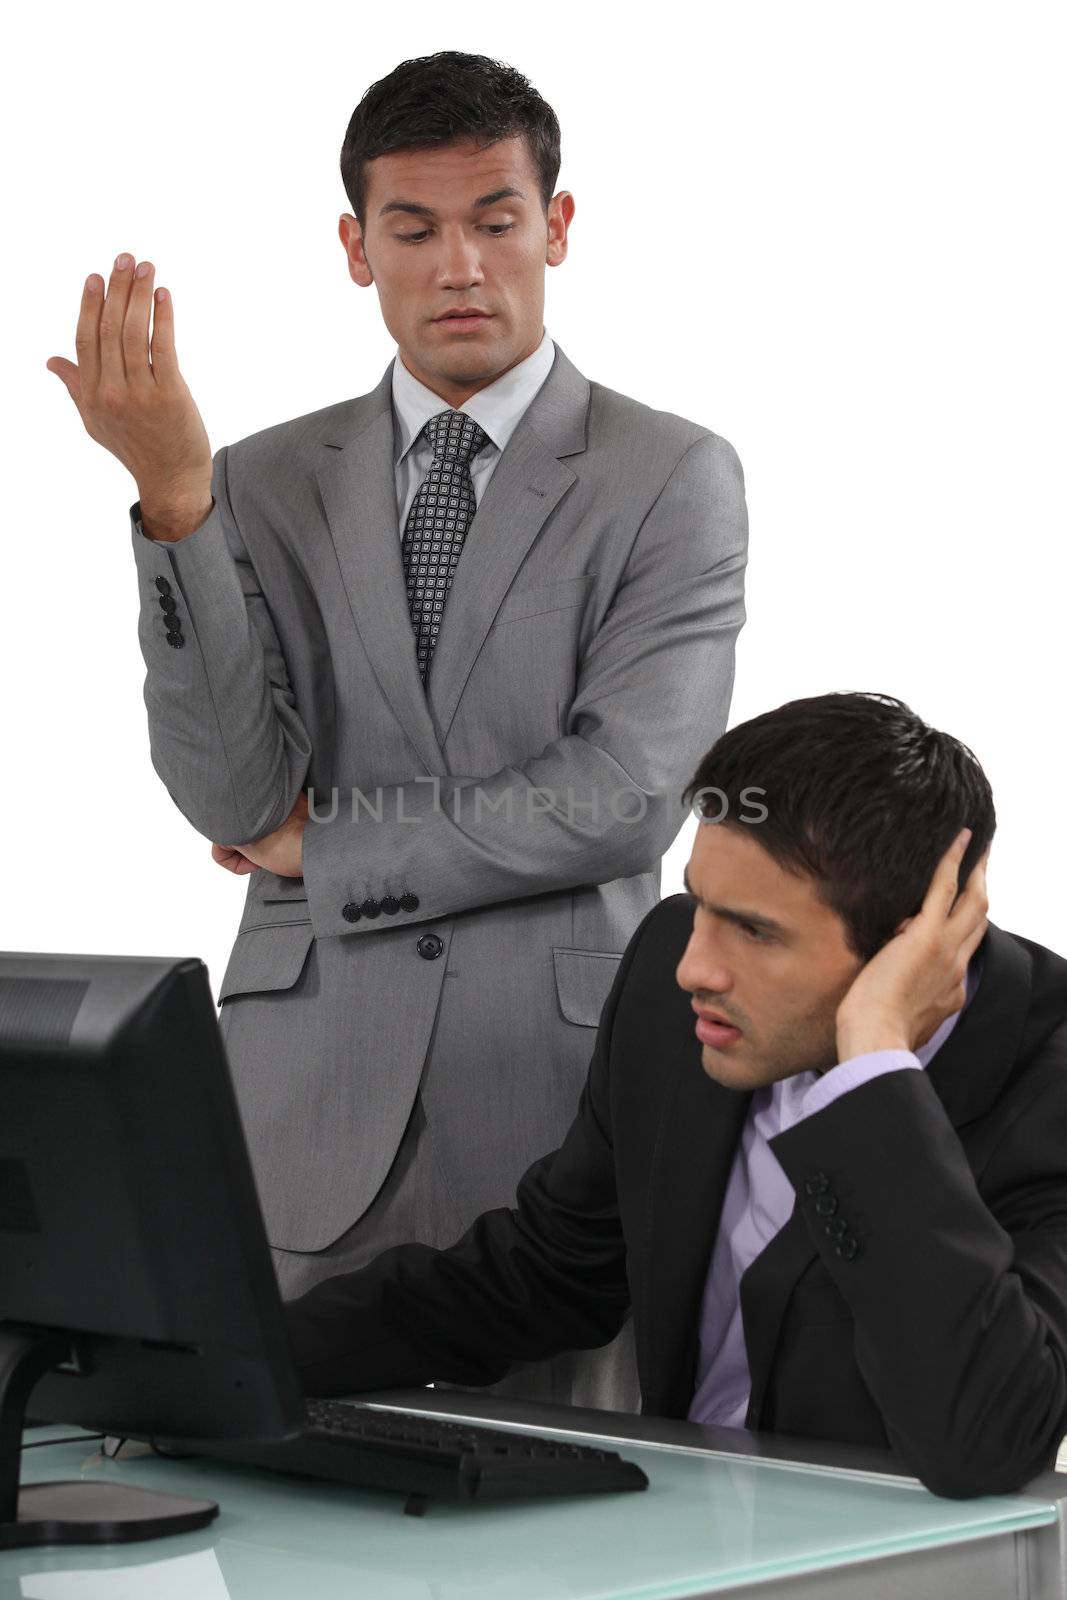 Businessmen having a difficult conversation by phovoir